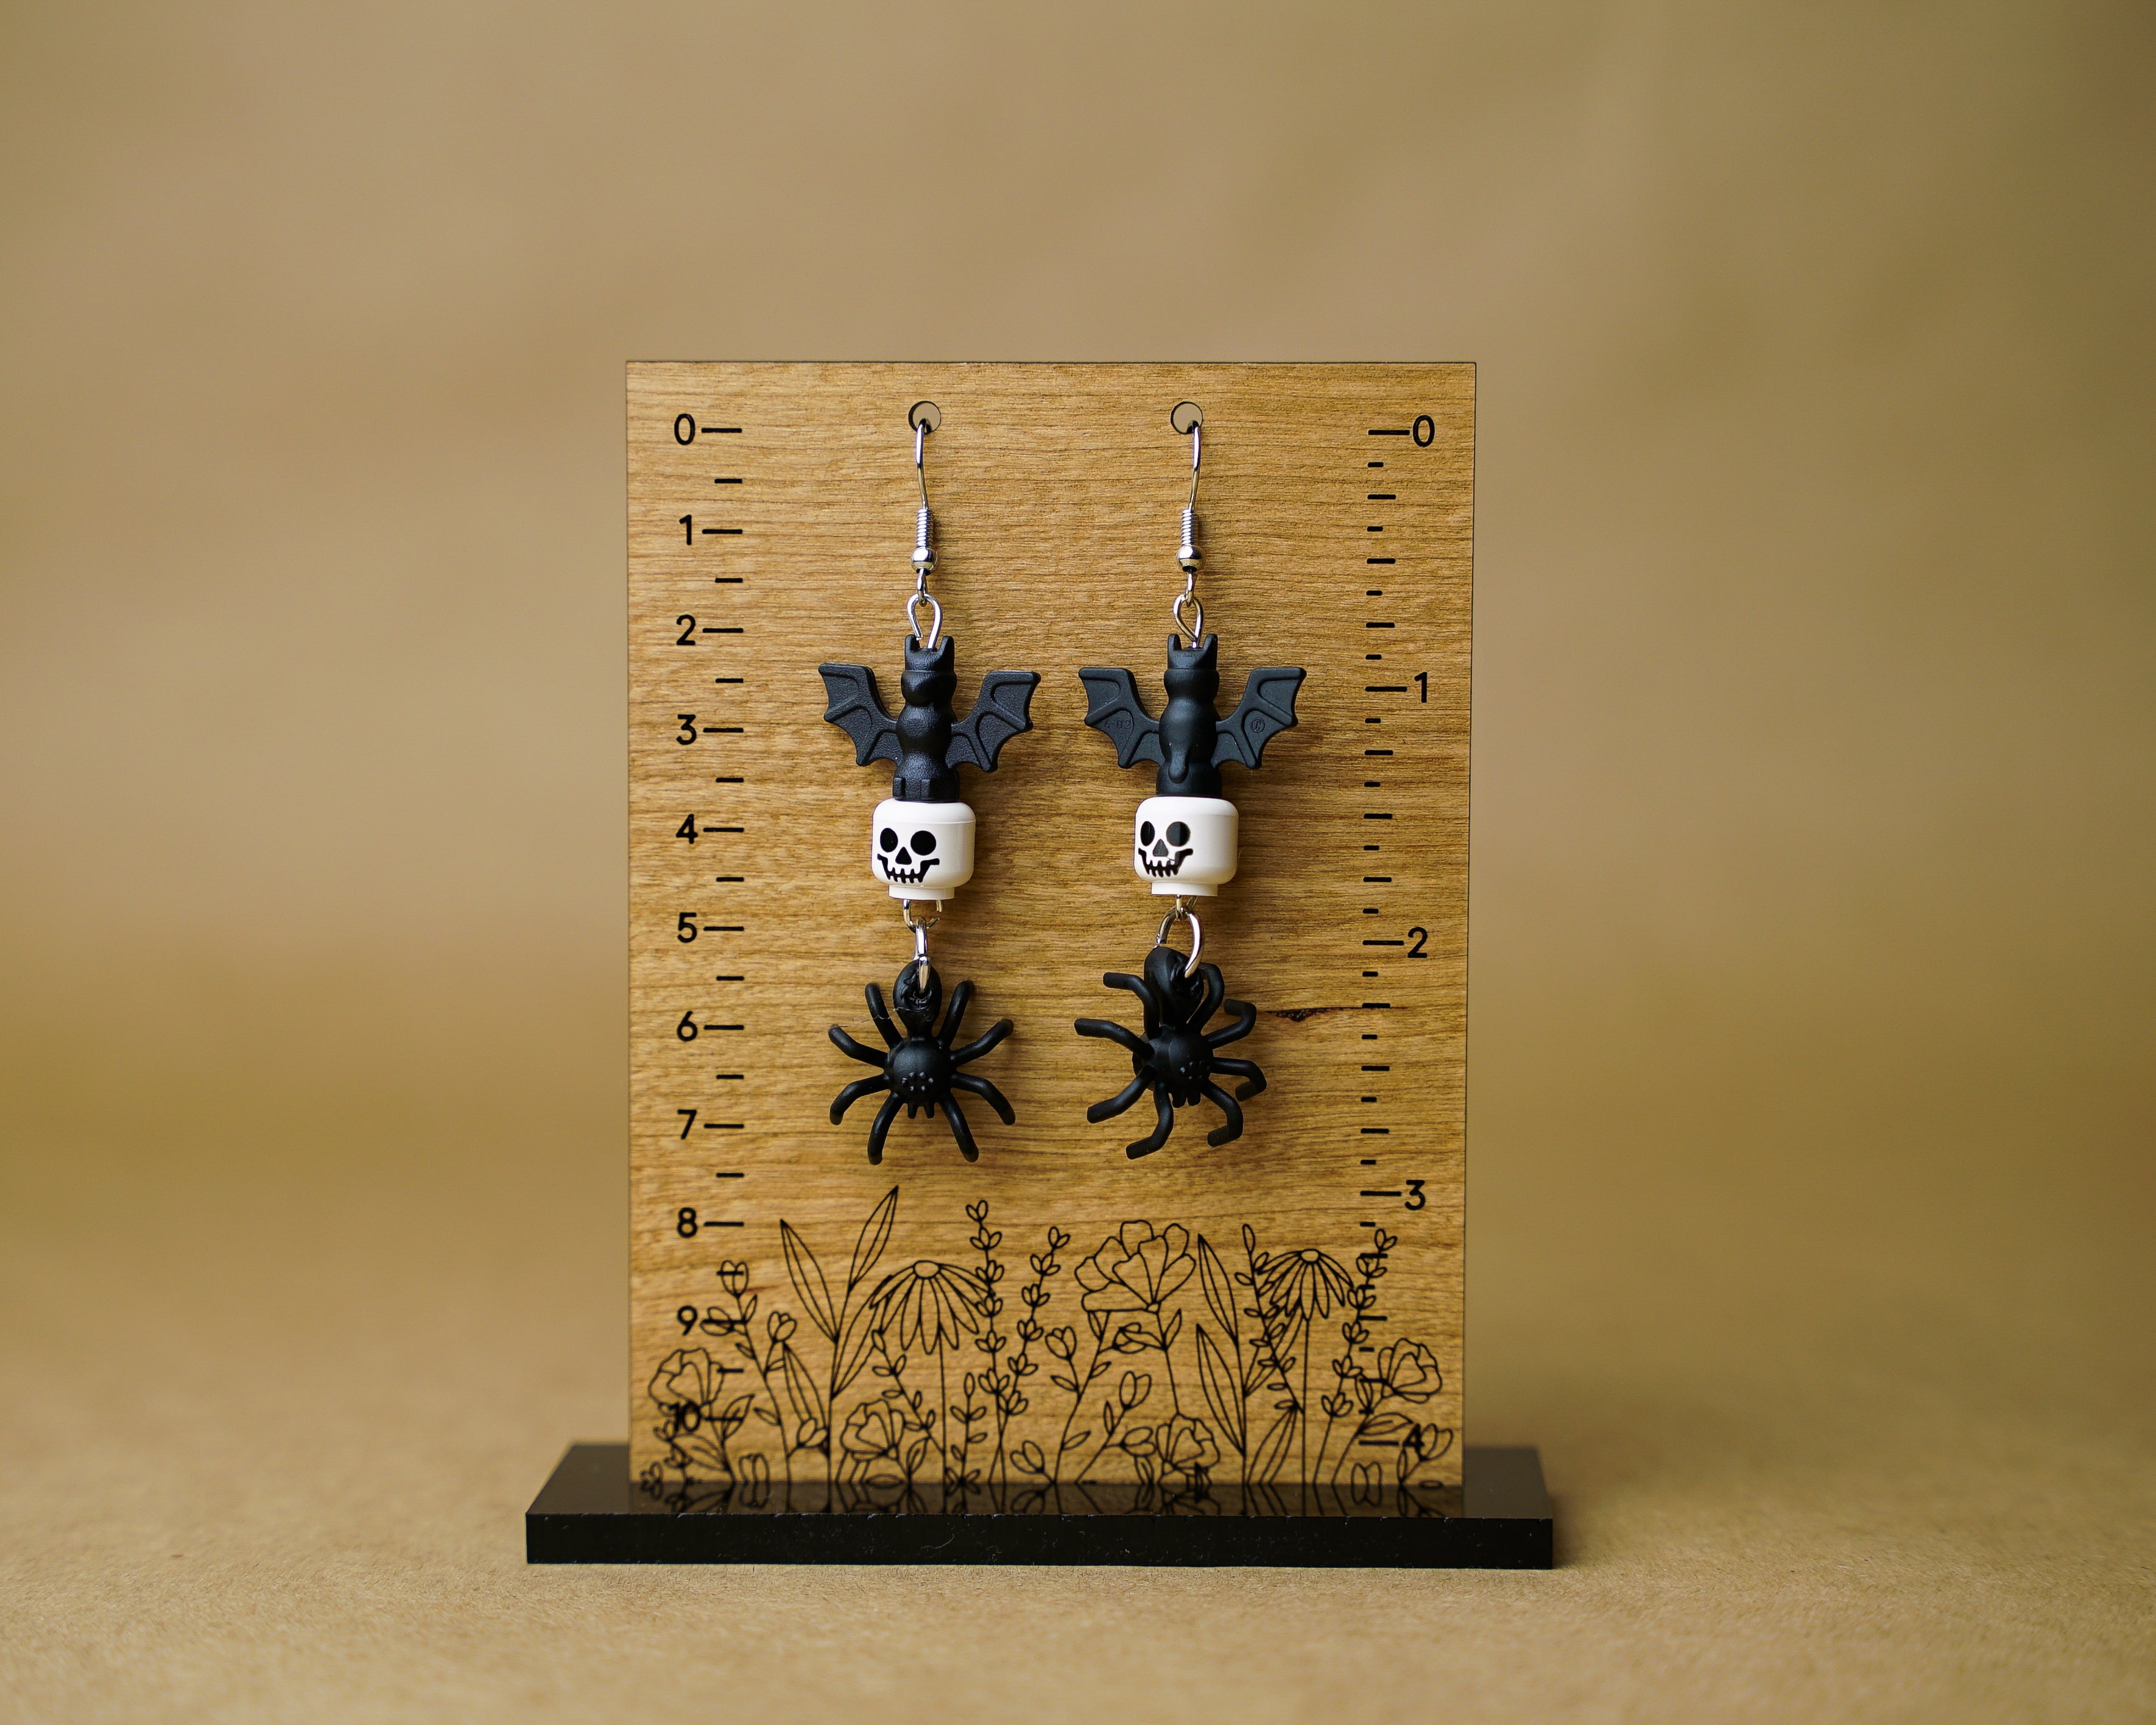 Frightful Night Halloween Earrings with Bats, Skulls & Spiders | Handmade from Authentic LEGO® Bricks